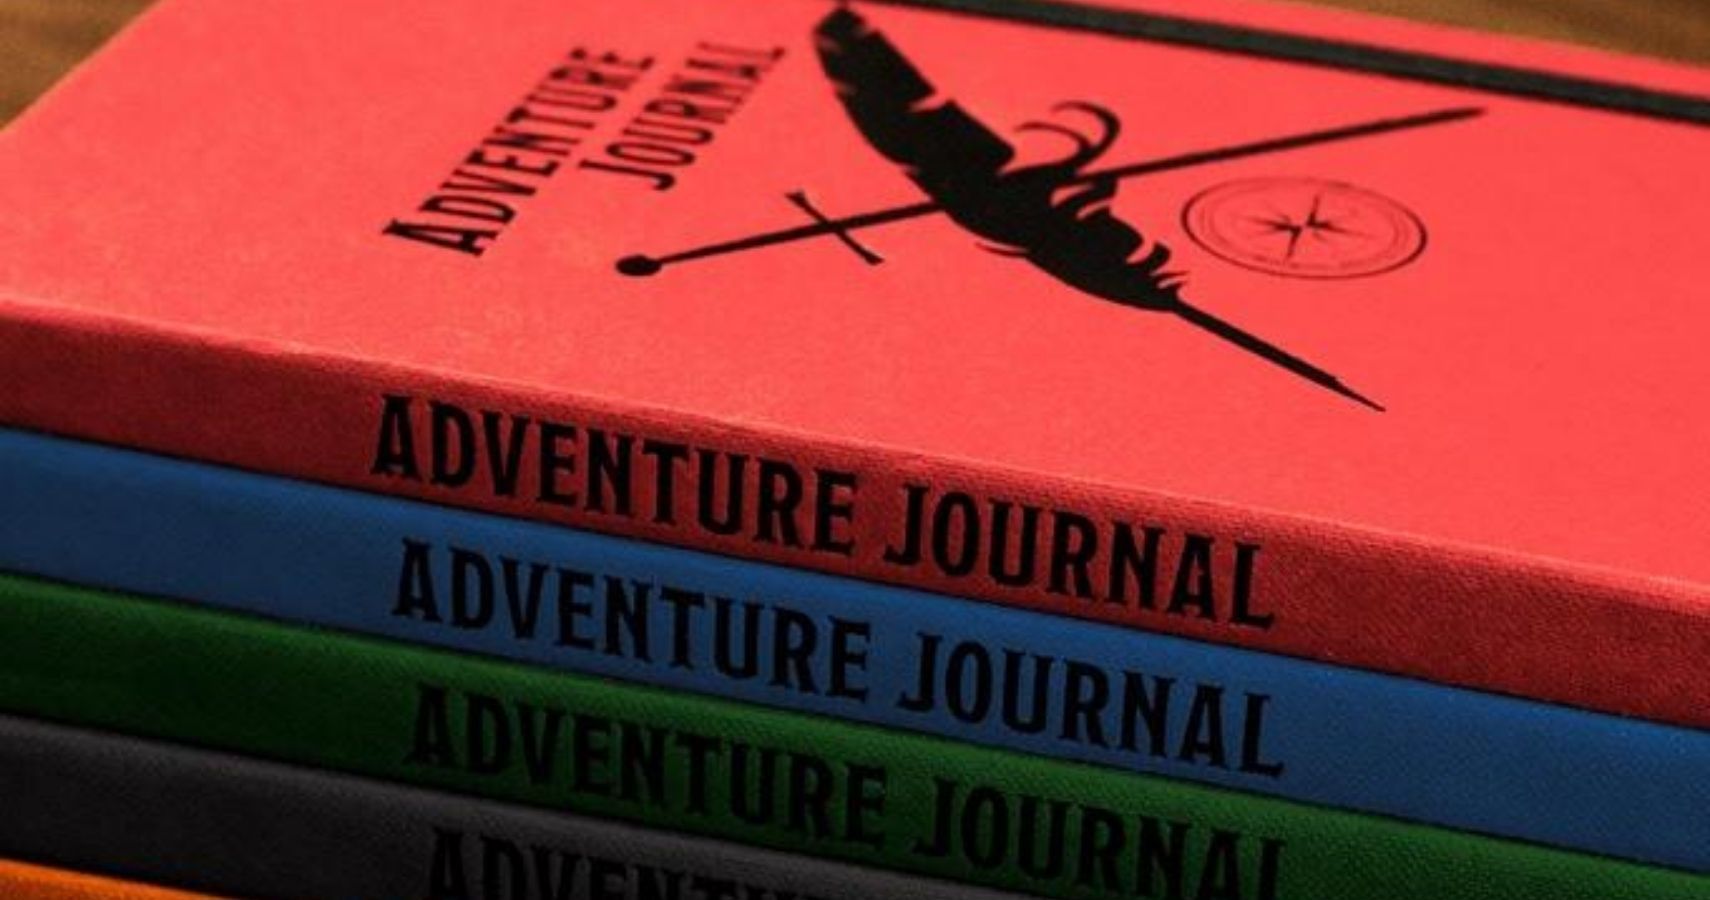 PvP And Table Titans Artist Scott Kurtz Has Launched The Adventure Journal Kickstarter